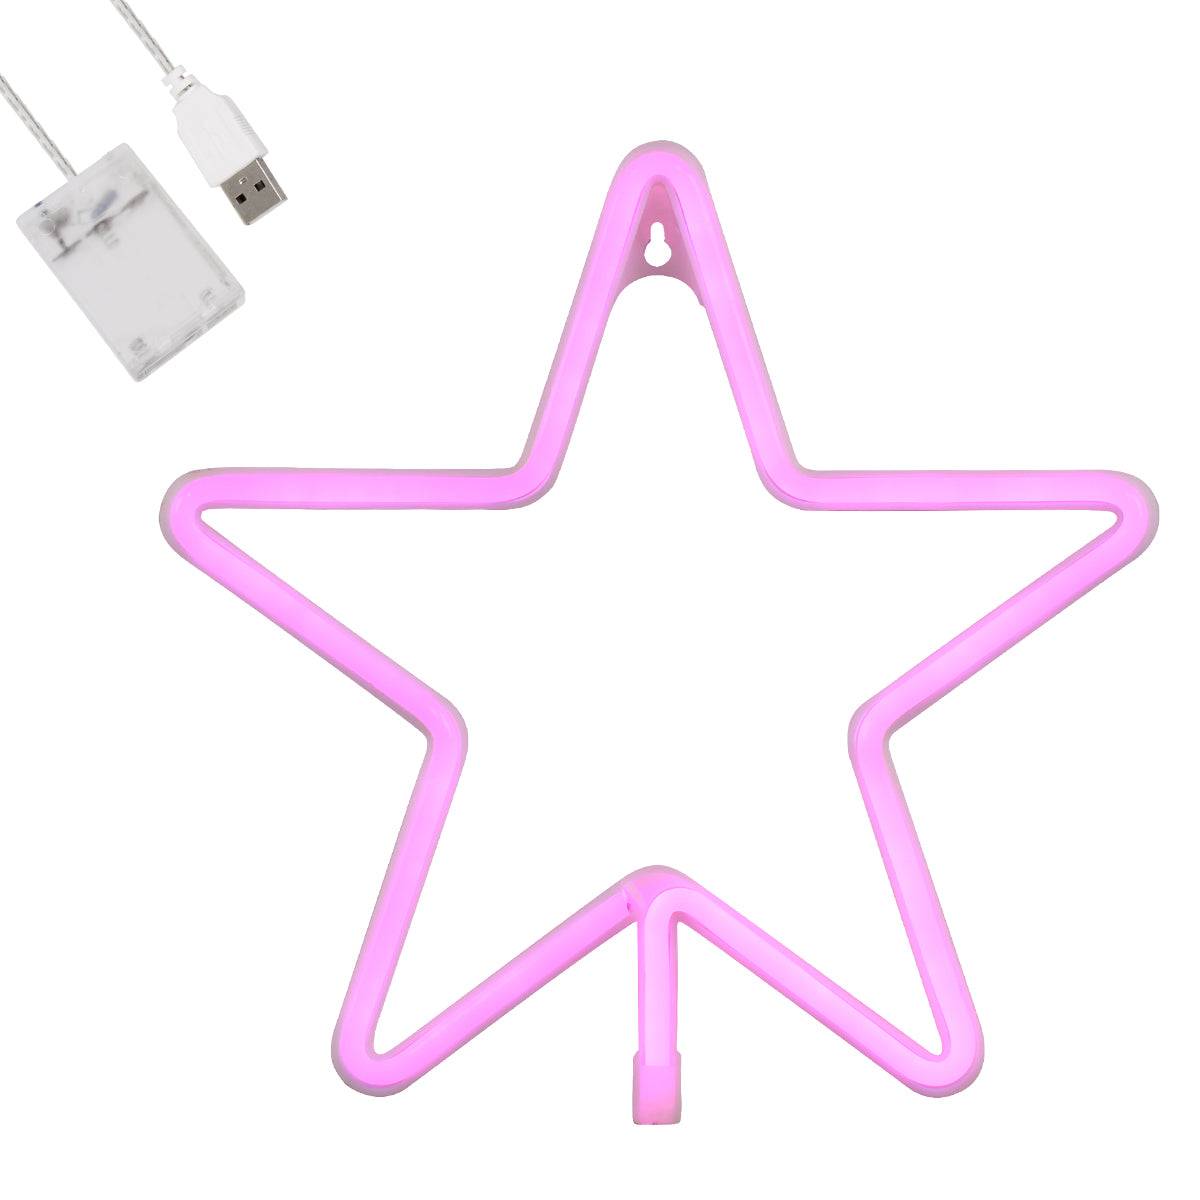 GloboStar® 78586 Φωτιστικό Ταμπέλα Φωτεινή Επιγραφή NEON LED Σήμανσης STAR 5W με Καλώδιο Τροφοδοσίας USB - Μπαταρίας 3xAAA (Δεν Περιλαμβάνονται) - Ροζ - ledmania.gr